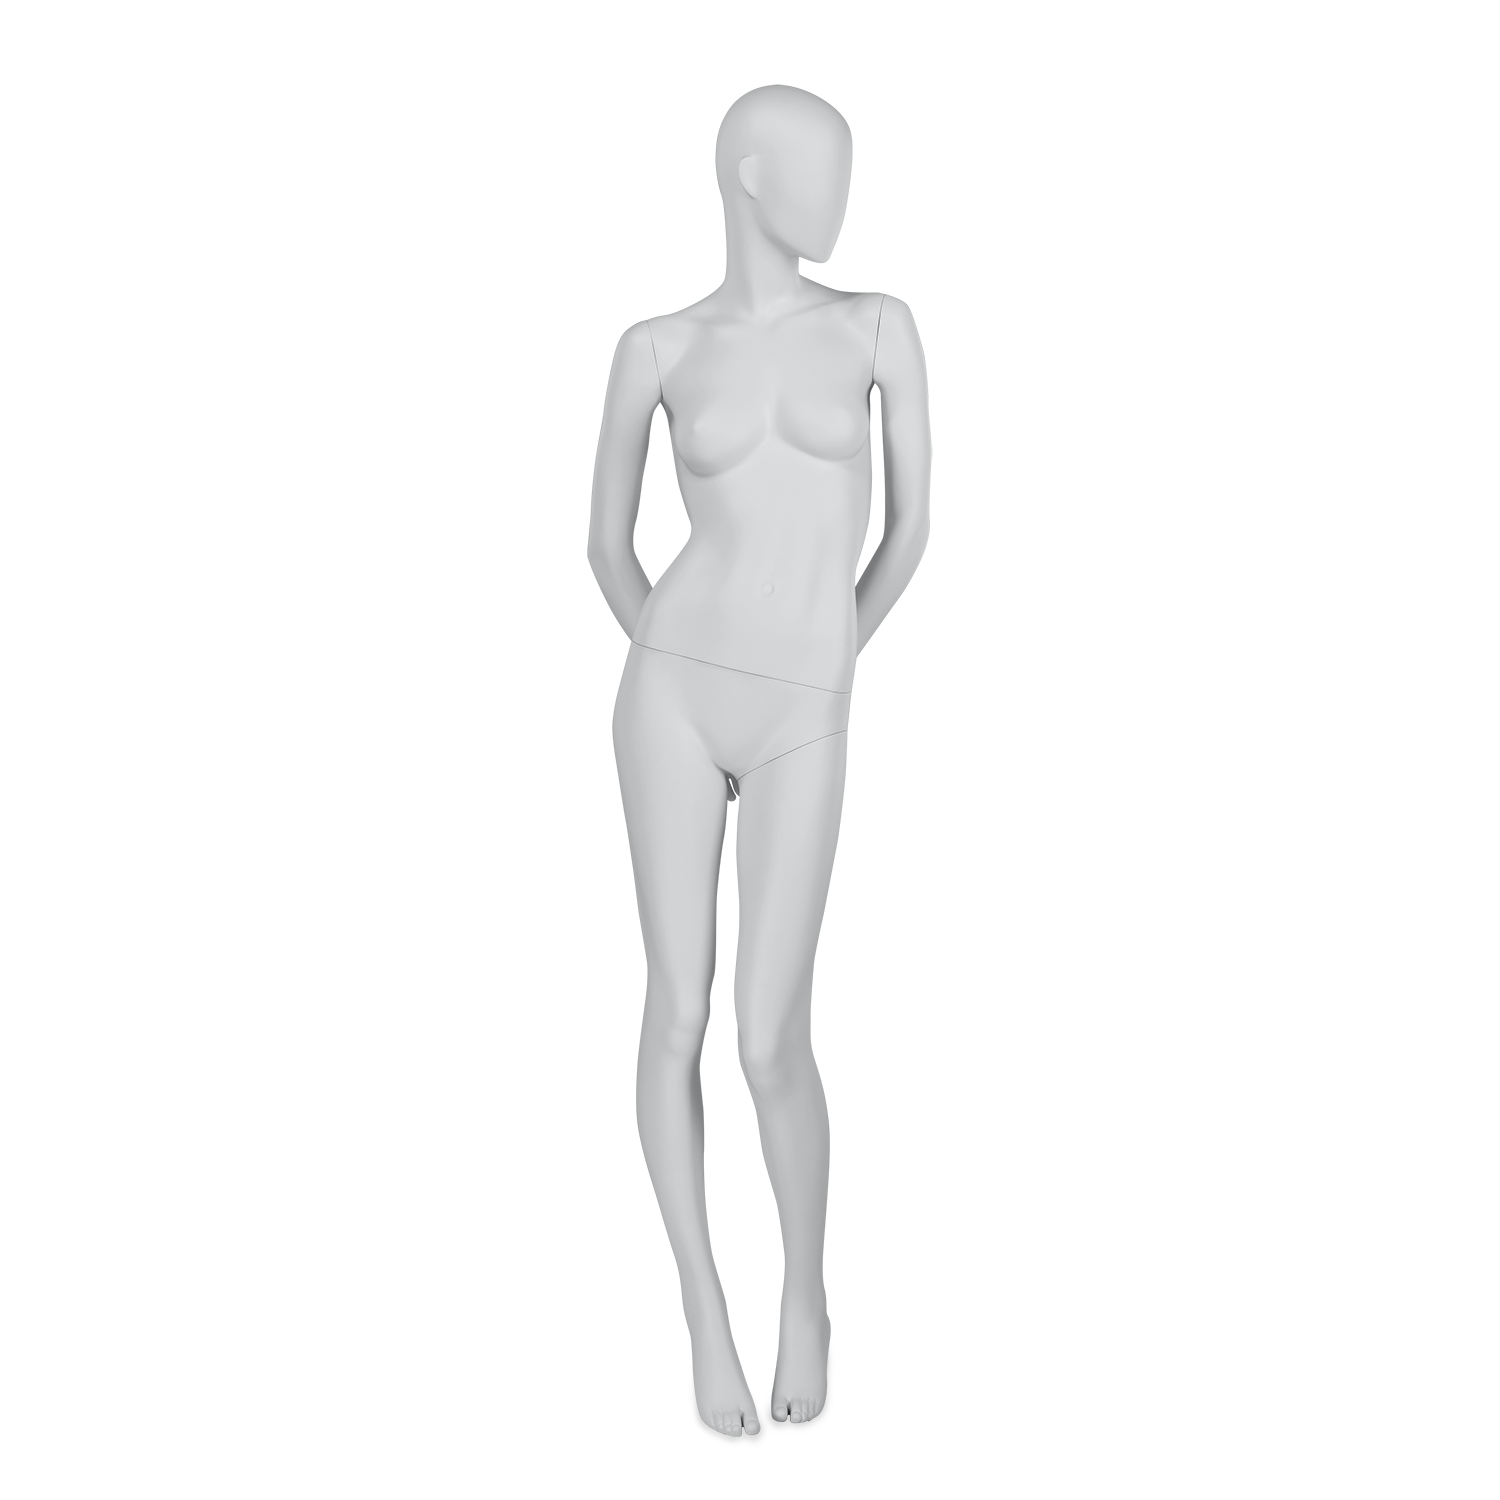 Female dressmaker mannequin - B469 - STOCKMAN - abstract / headless / white